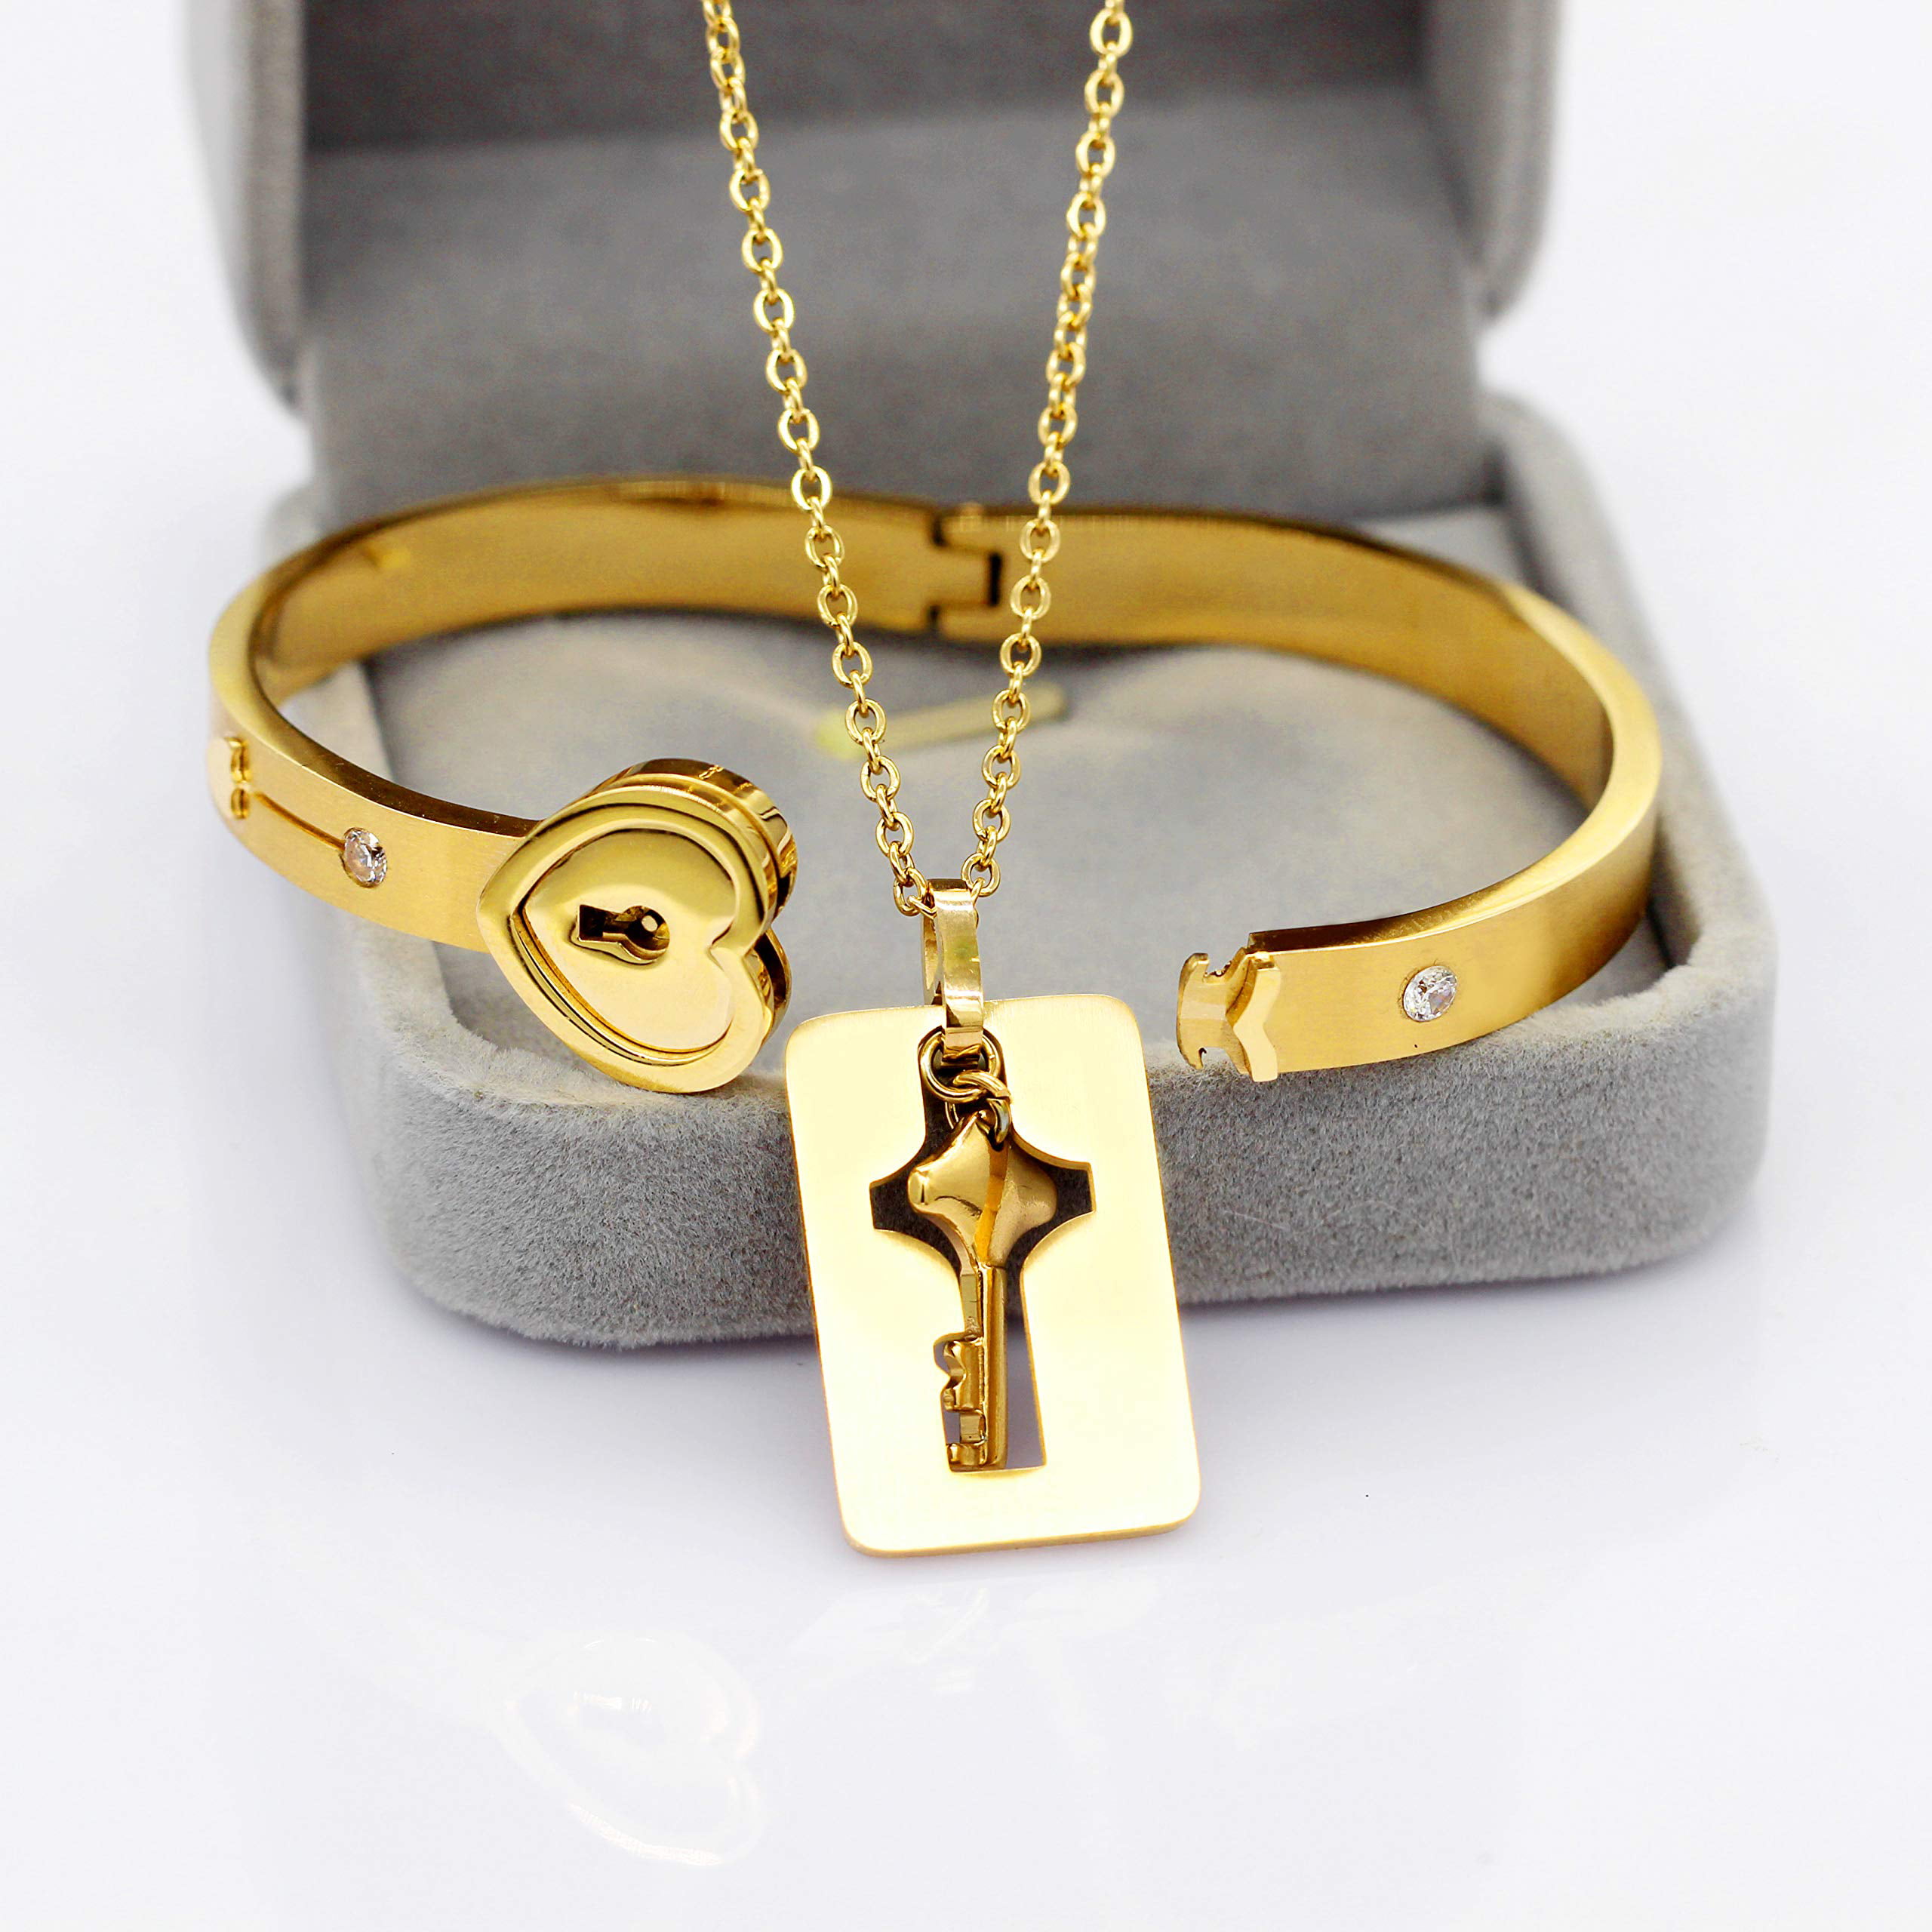 SLPUSH Titanium Heart Love Lock Bracelet with Key Pendant Necklace Steel  Bangle Sets Couple Gifts